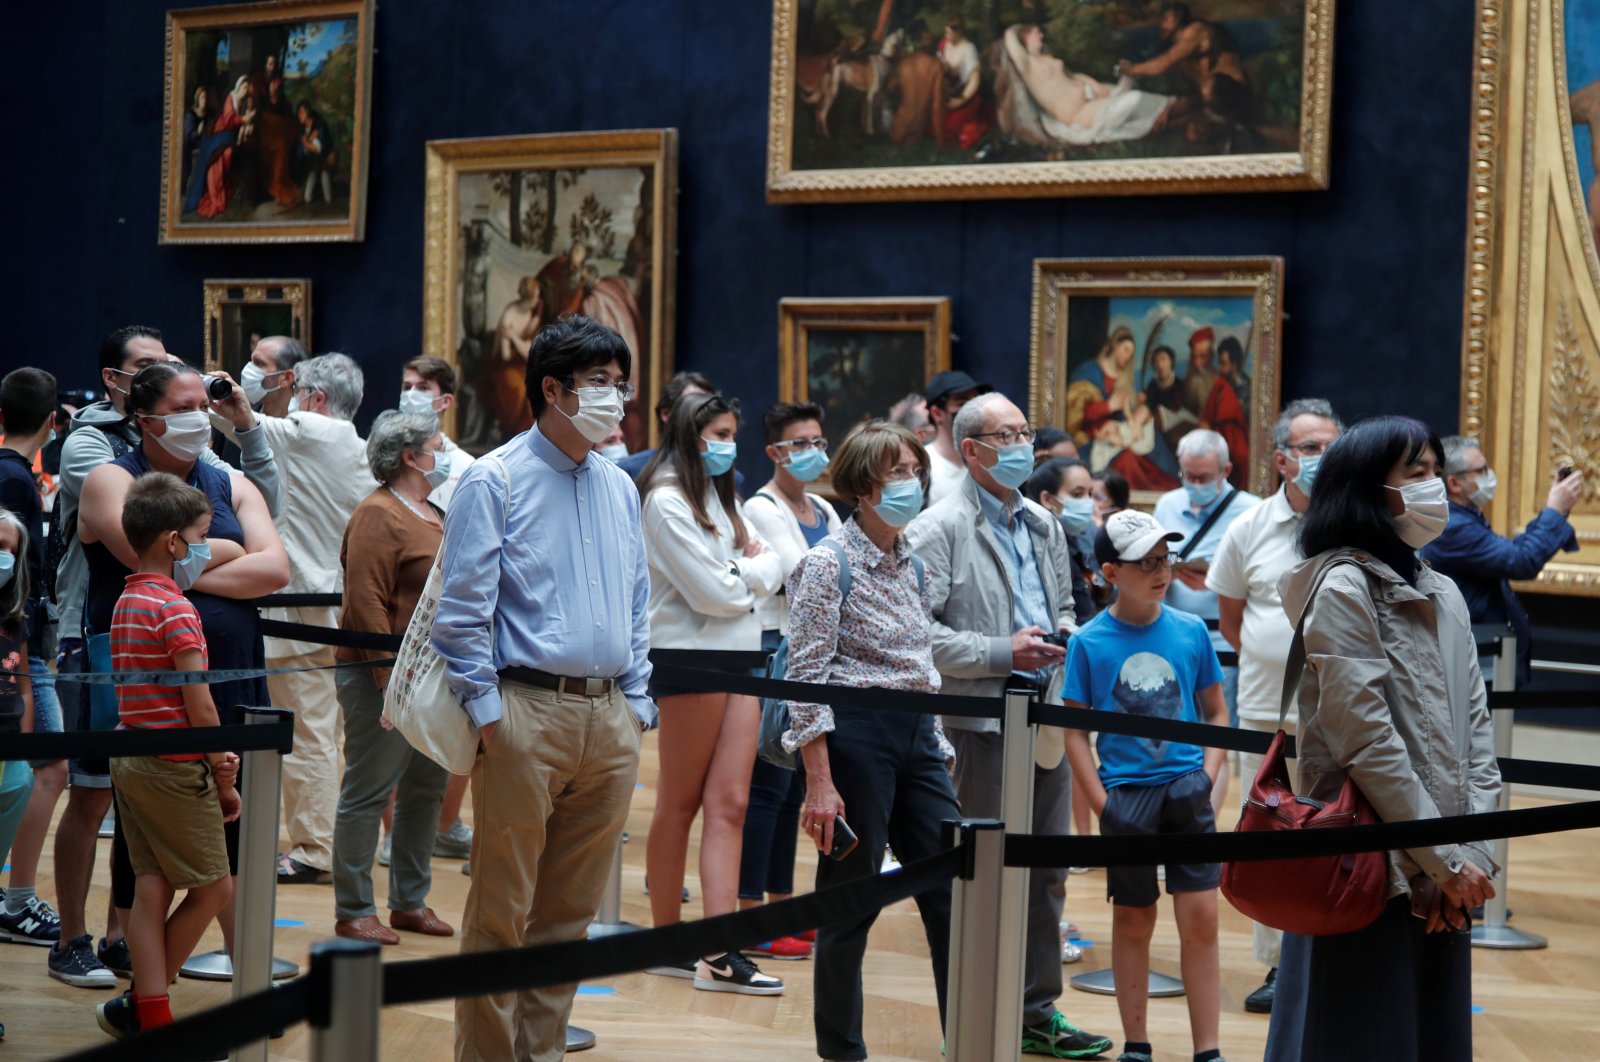 Visitors, wearing protective face masks, queue to see the painting "Mona Lisa" (La Joconde) by Leonardo Da Vinci at the Louvre museum, Paris, July 6, 2020. (REUTERS Photo)